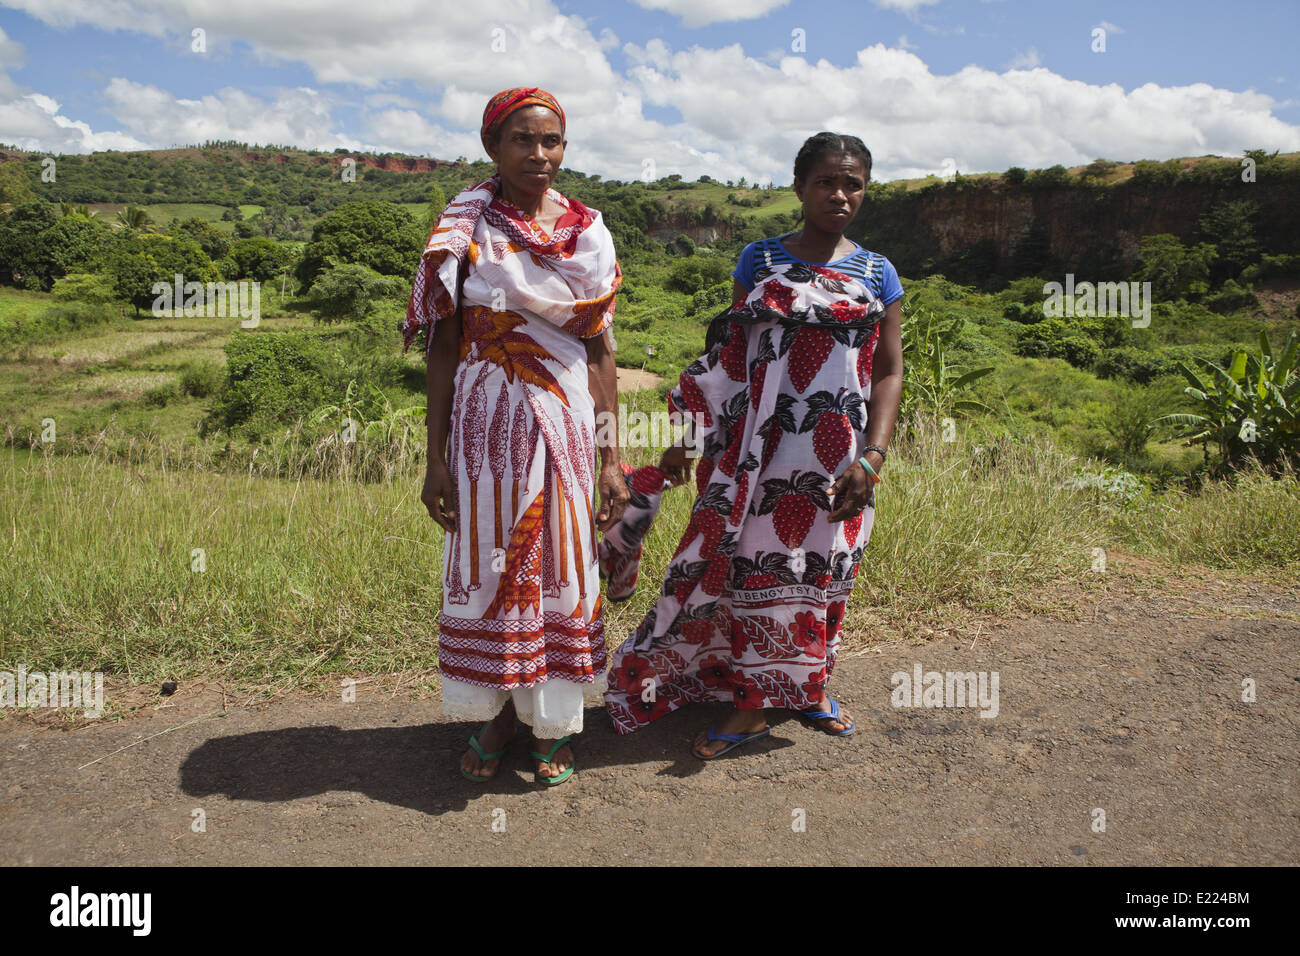 Frauen mit Tracht, Madagaskar Stockfotografie - Alamy